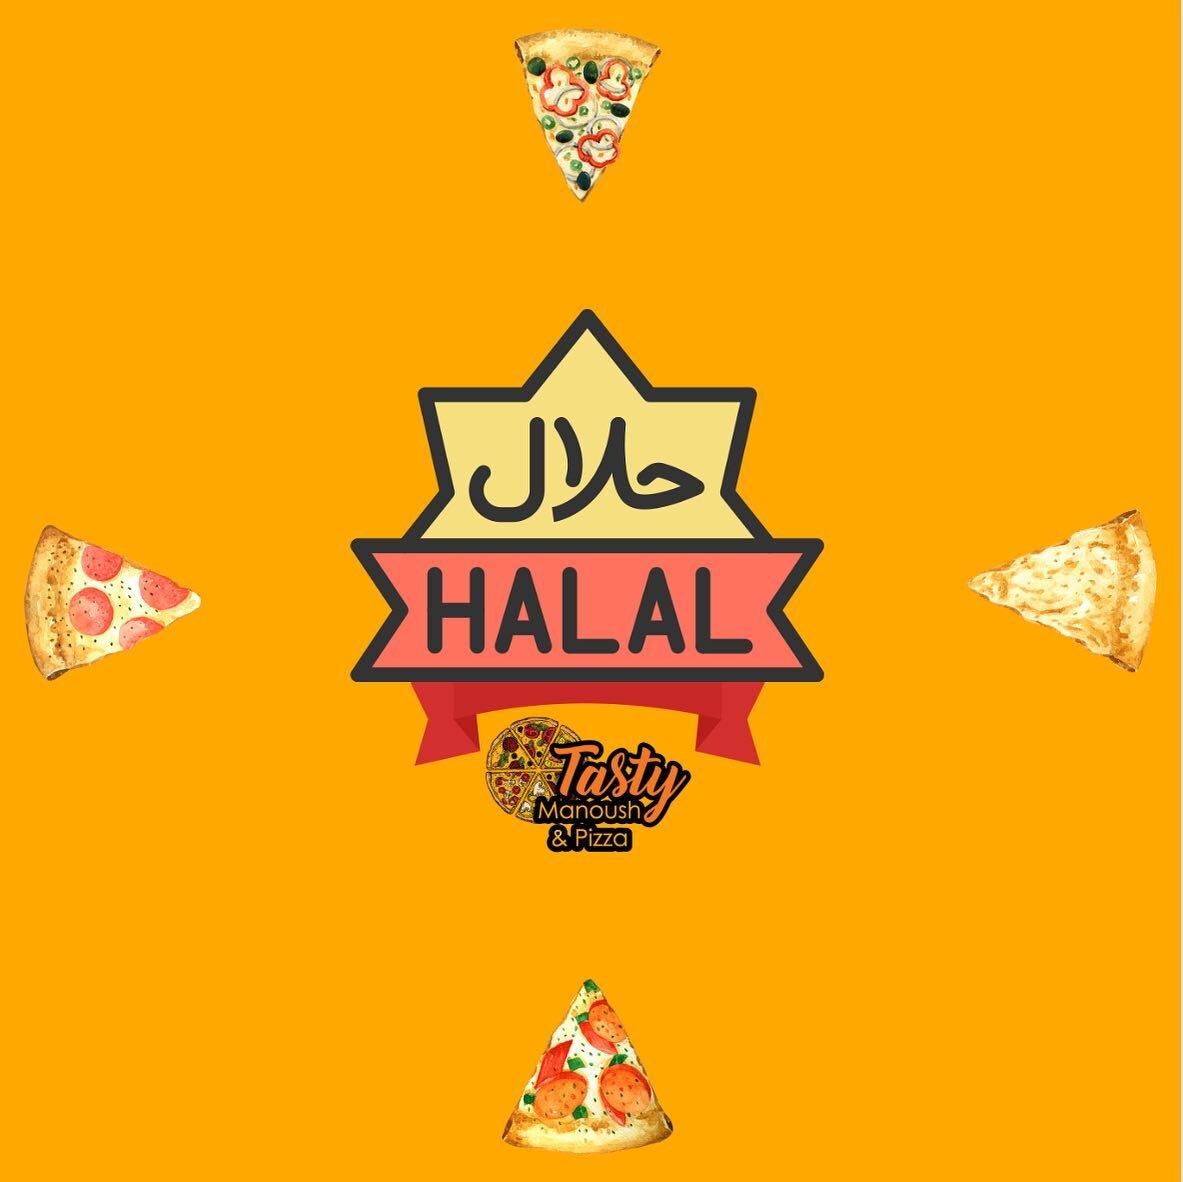 100% Halal Certified 🐓🥩
.
.
.
#halal #halalfood #halalmemes #halalcertified #pizza #pizzatime